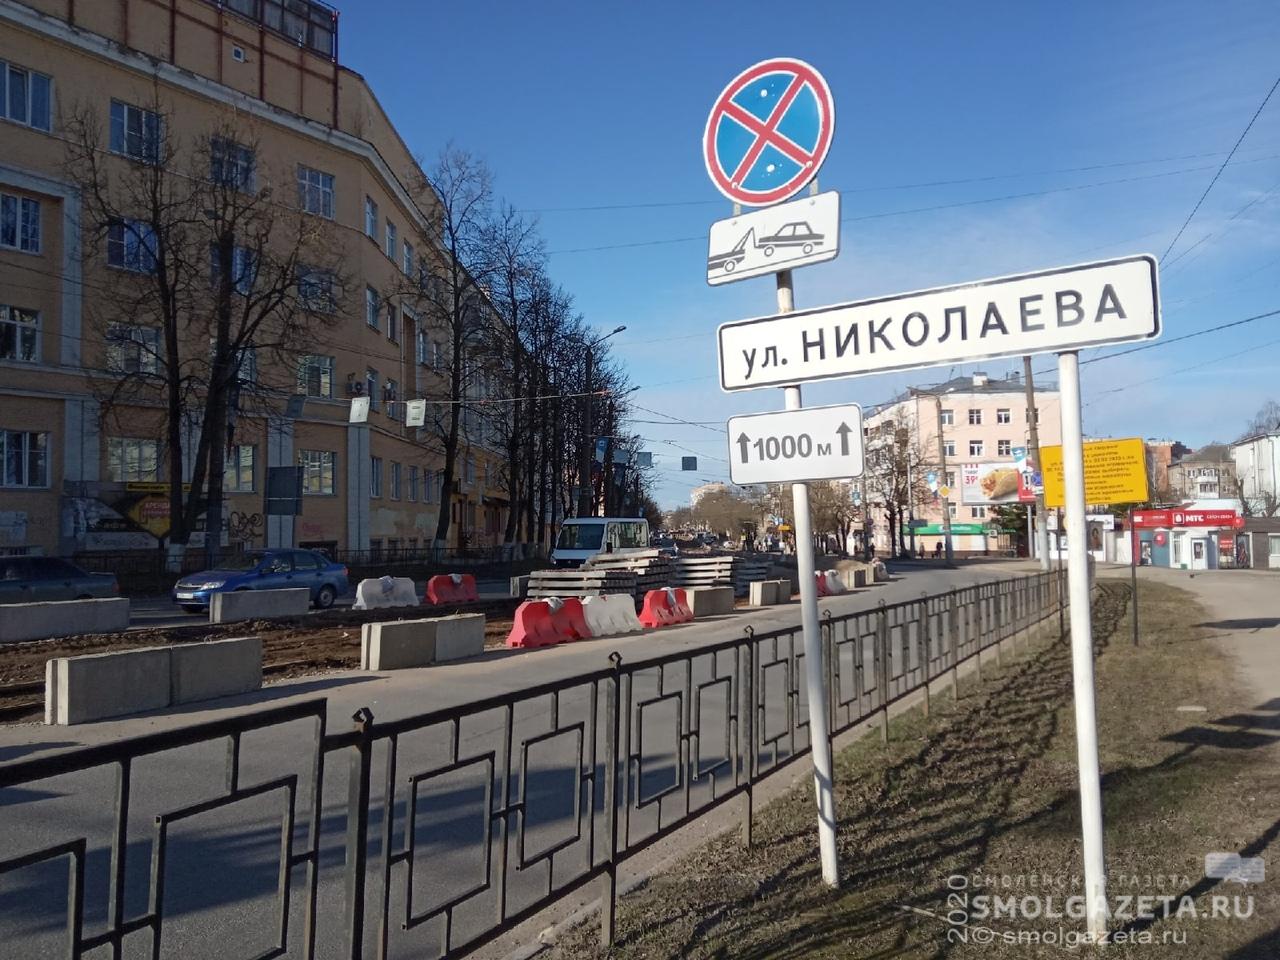 На улице Николаева в Смоленске строители меняют коллектор 